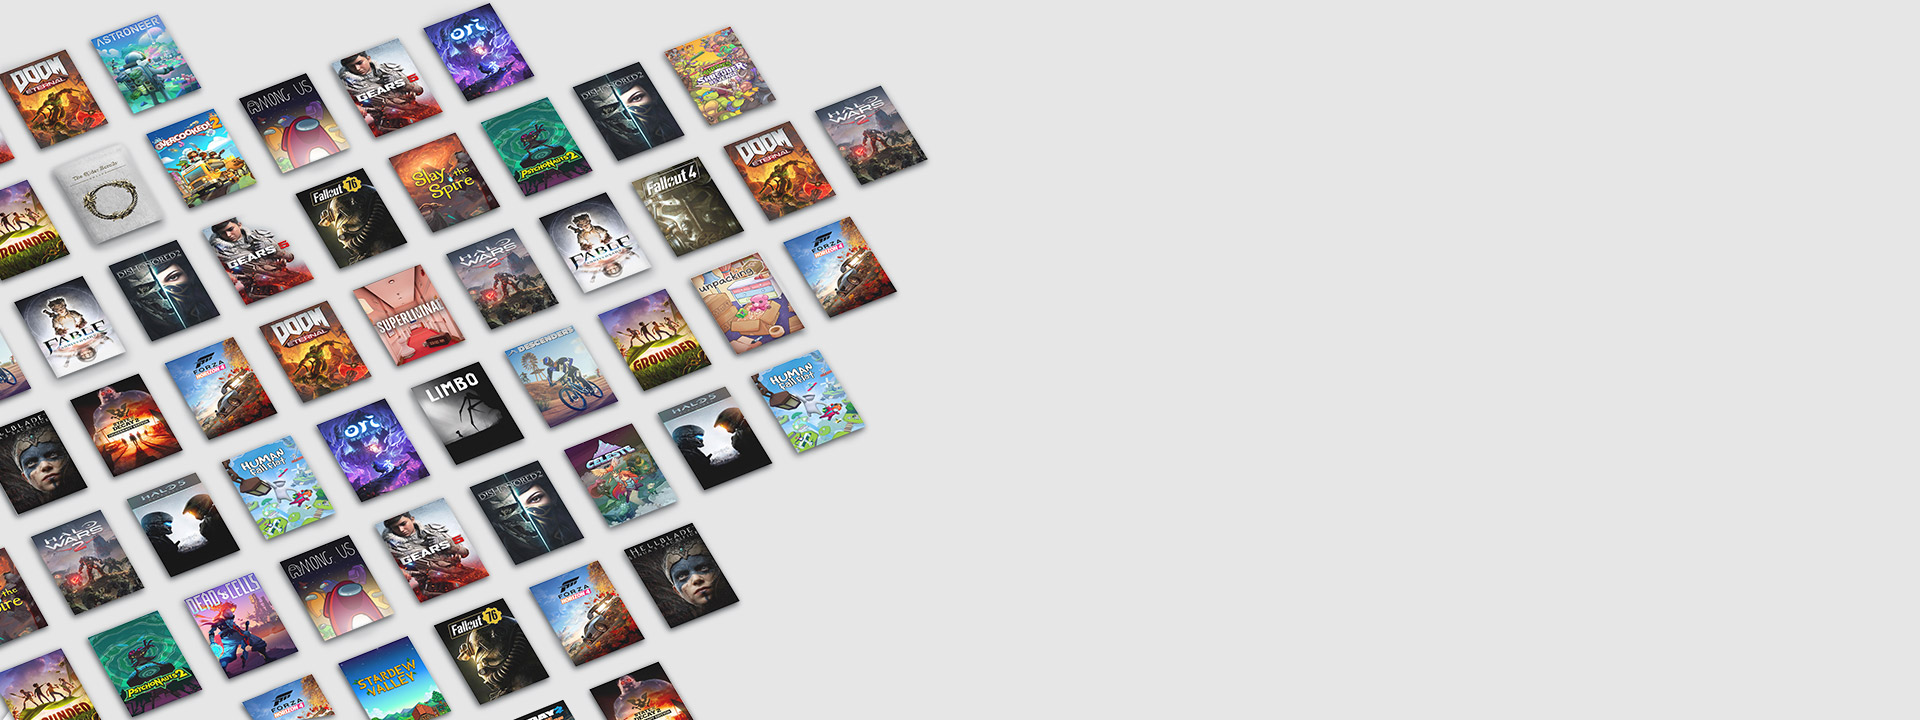 Zestaw zdjęć pudełek gier z katalogu Game Pass Core